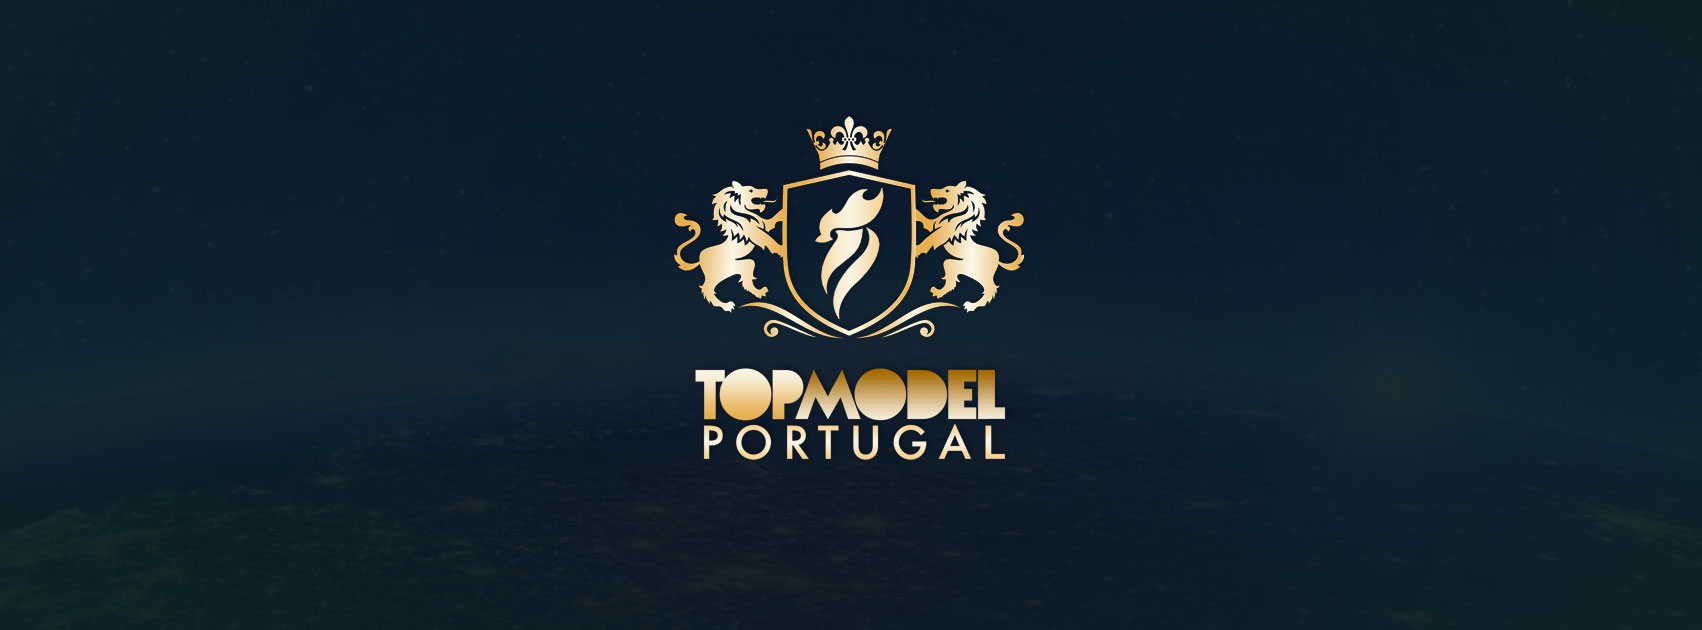 TOP MODEL PORTUGAL Fotogenia - TOP MODEL PORTUGAL